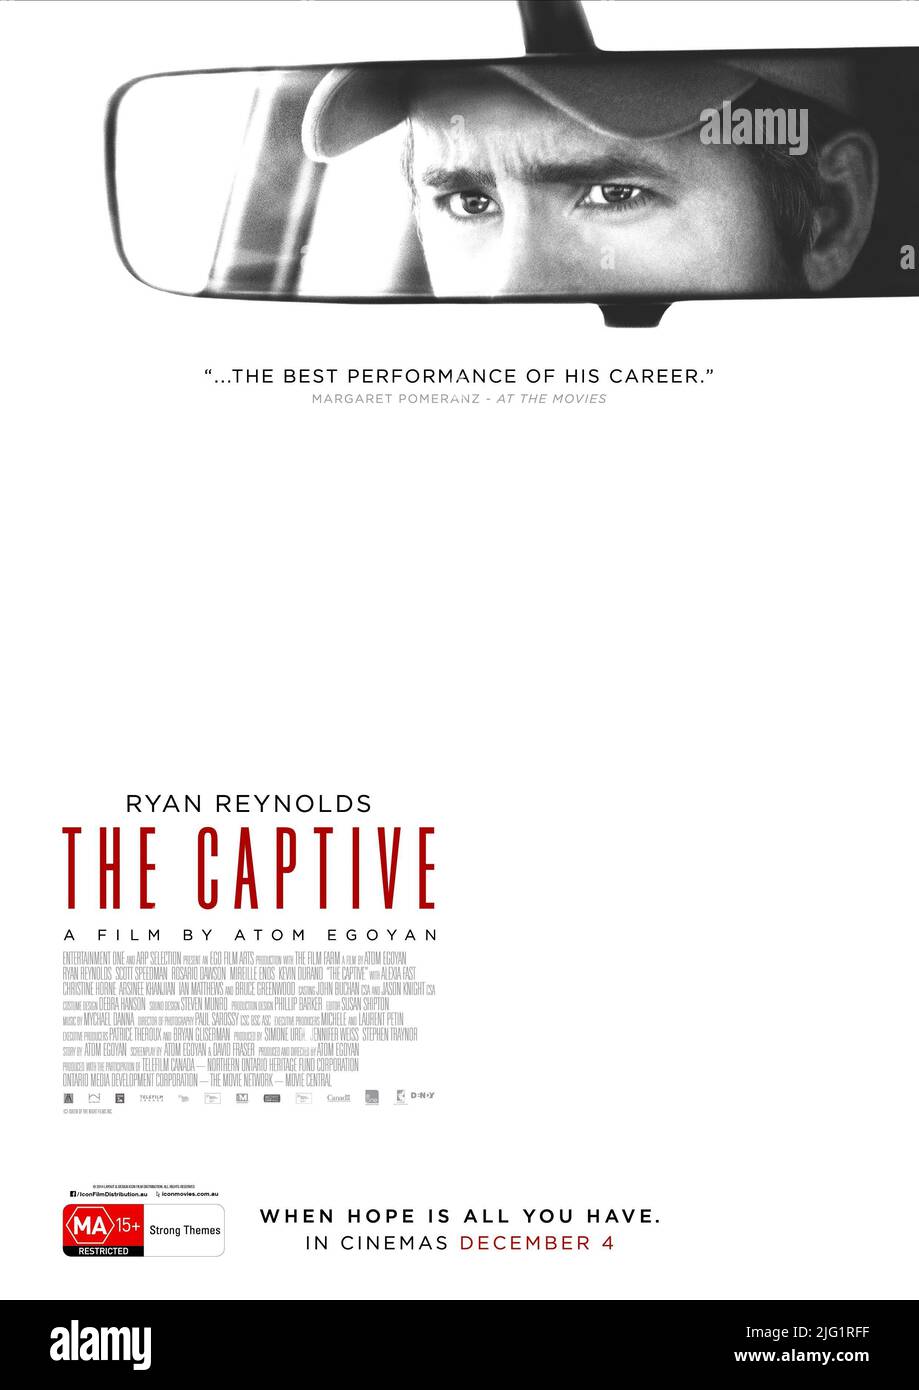 https://c8.alamy.com/comp/2JG1RFF/ryan-reynolds-poster-the-captive-2014-2JG1RFF.jpg